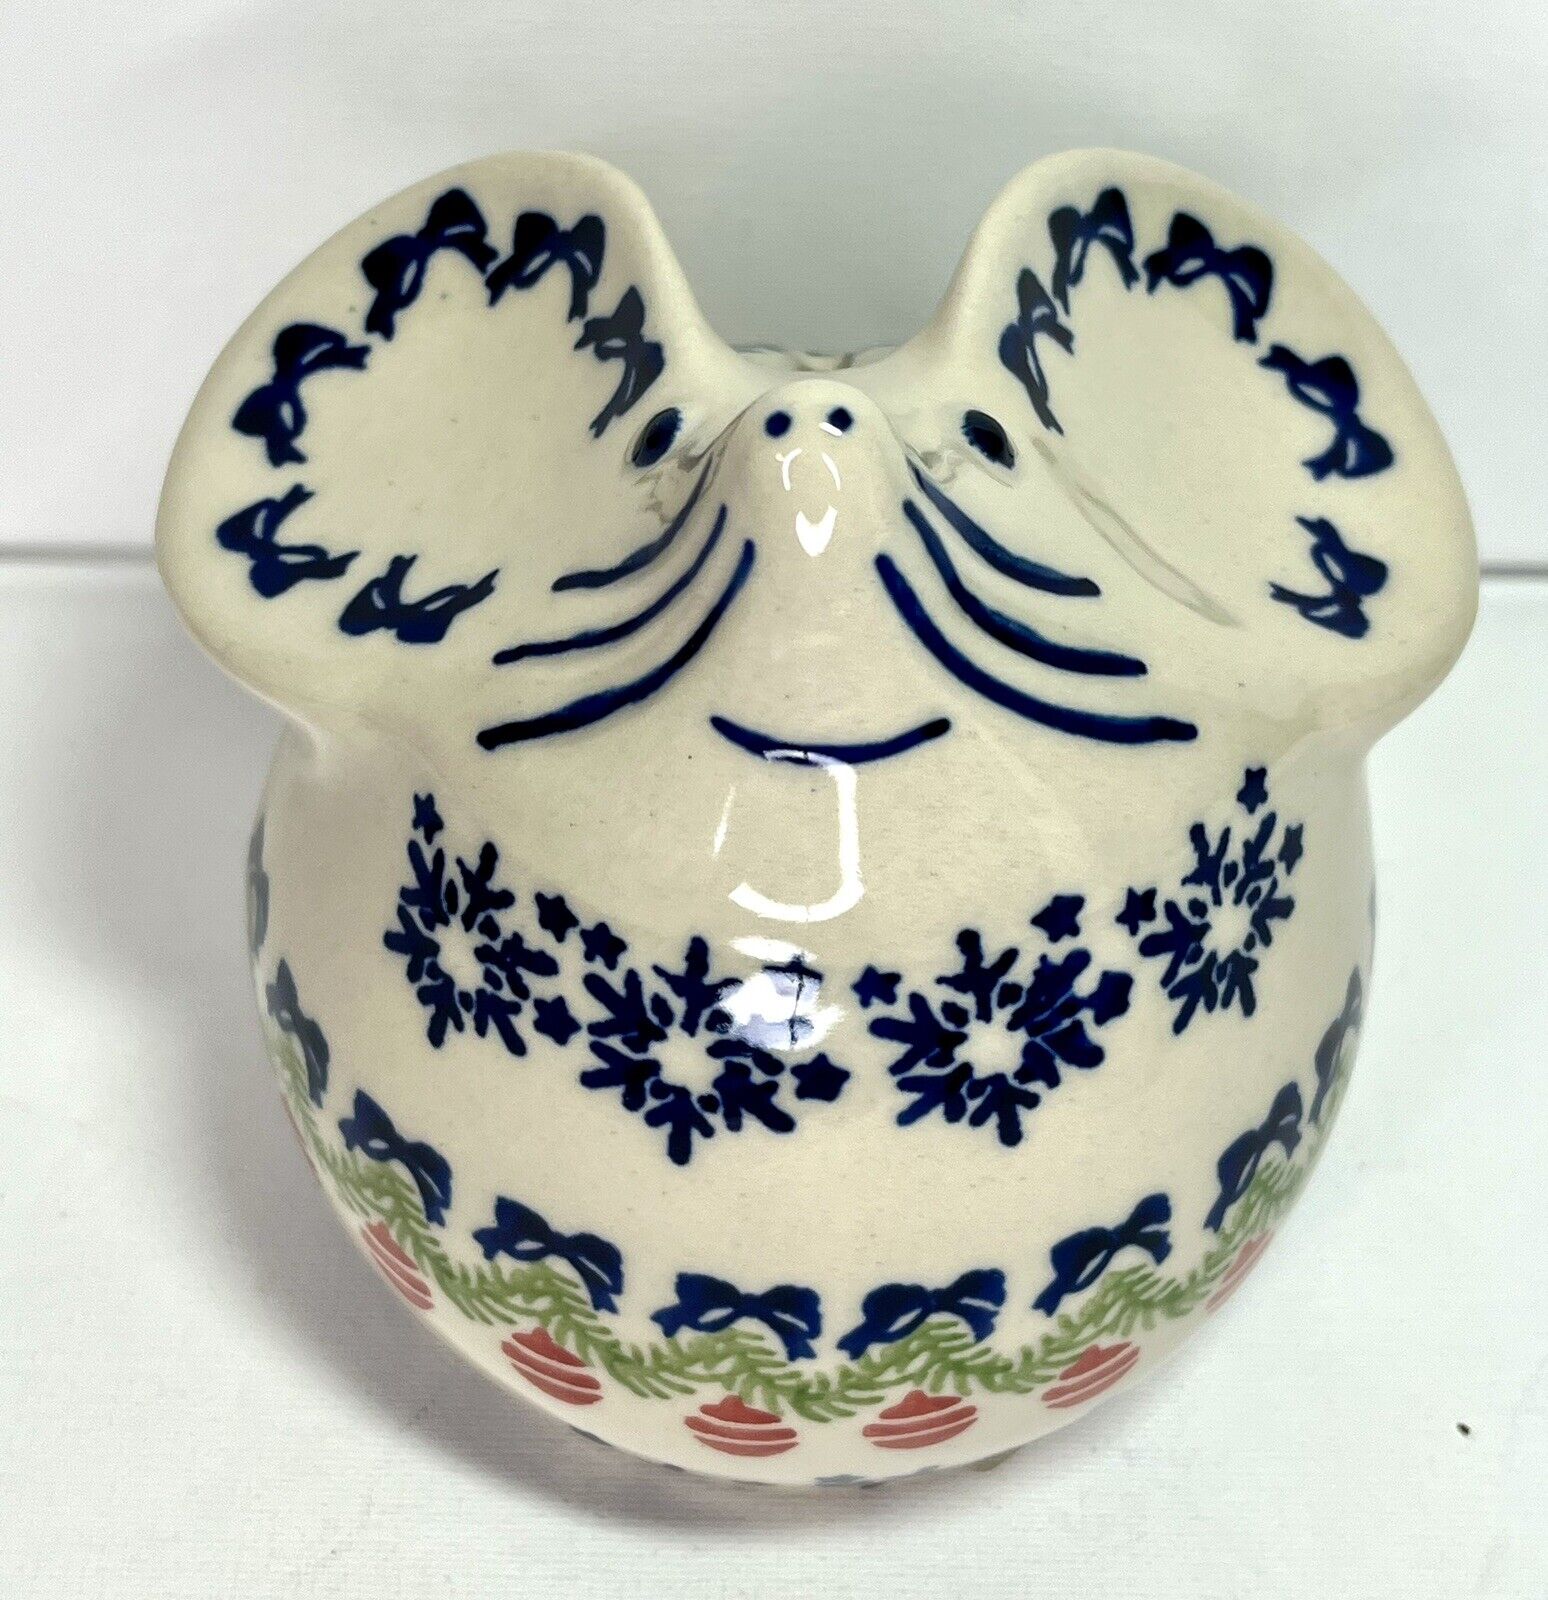 Bolesiawiec Polish Pottery Christmas Mouse Bank